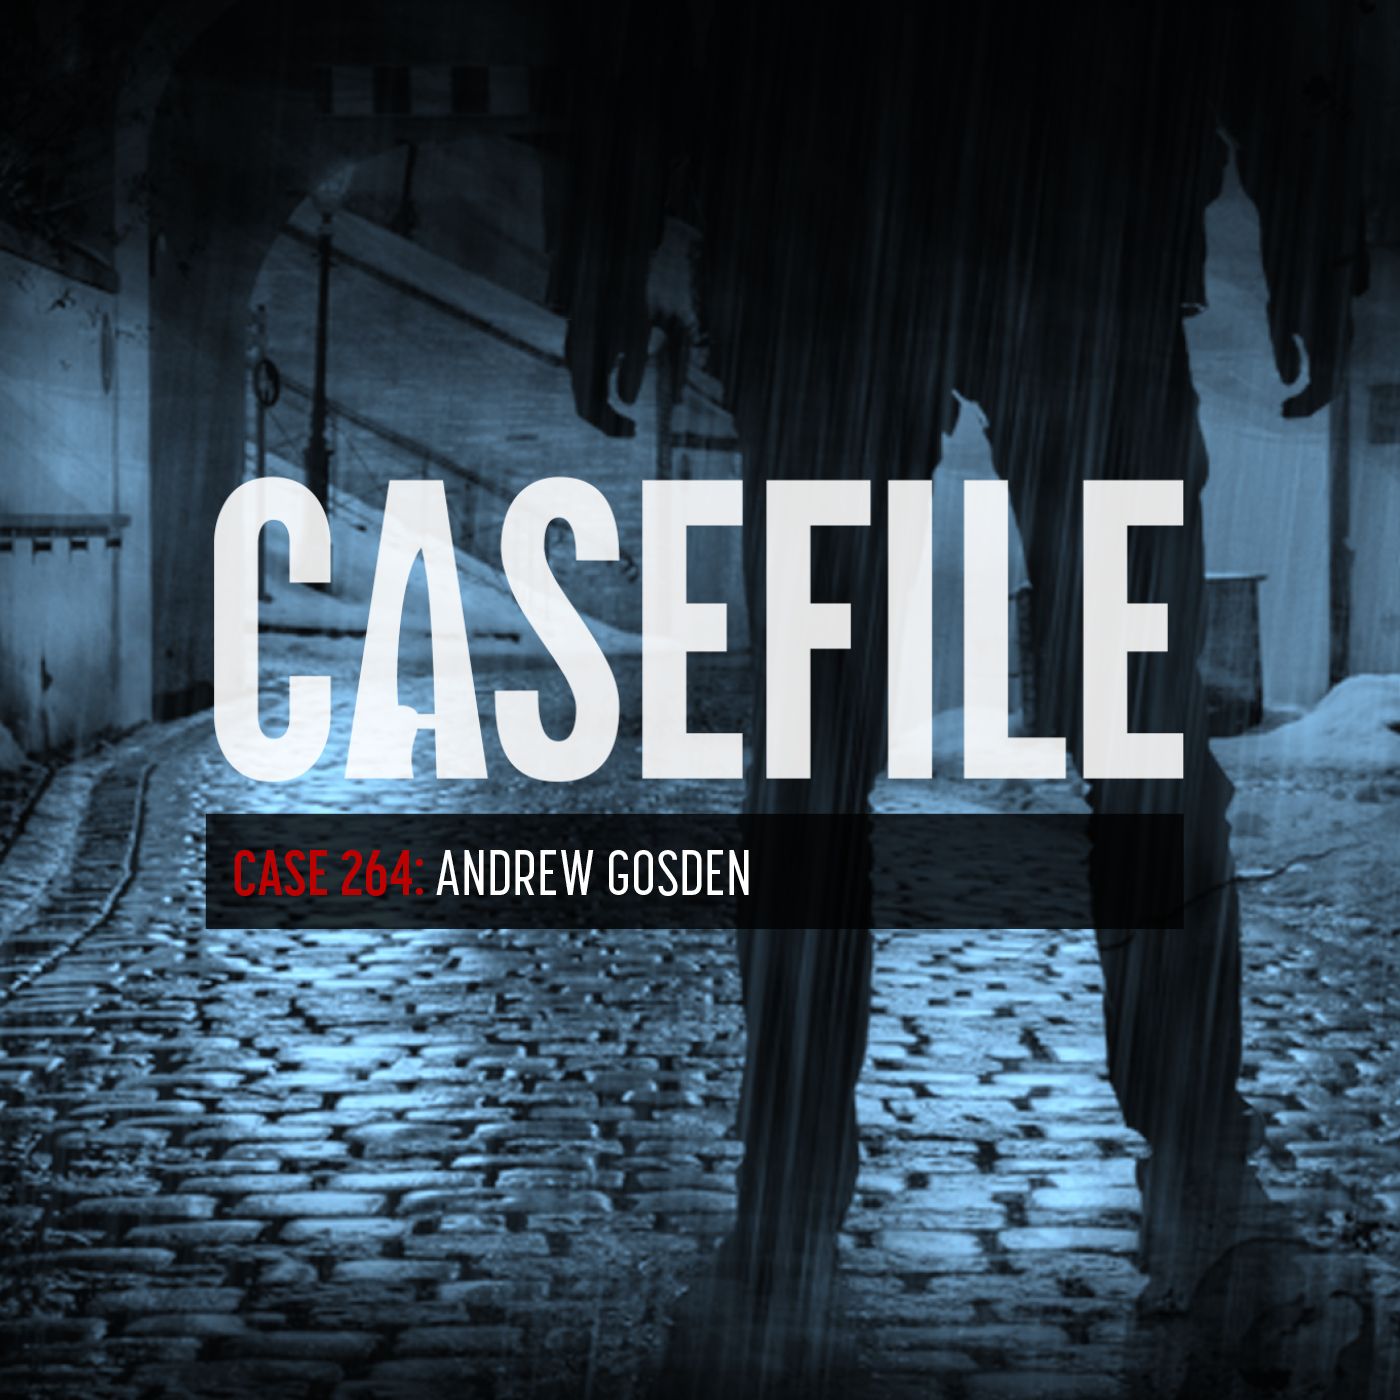 Case 264: Andrew Gosden